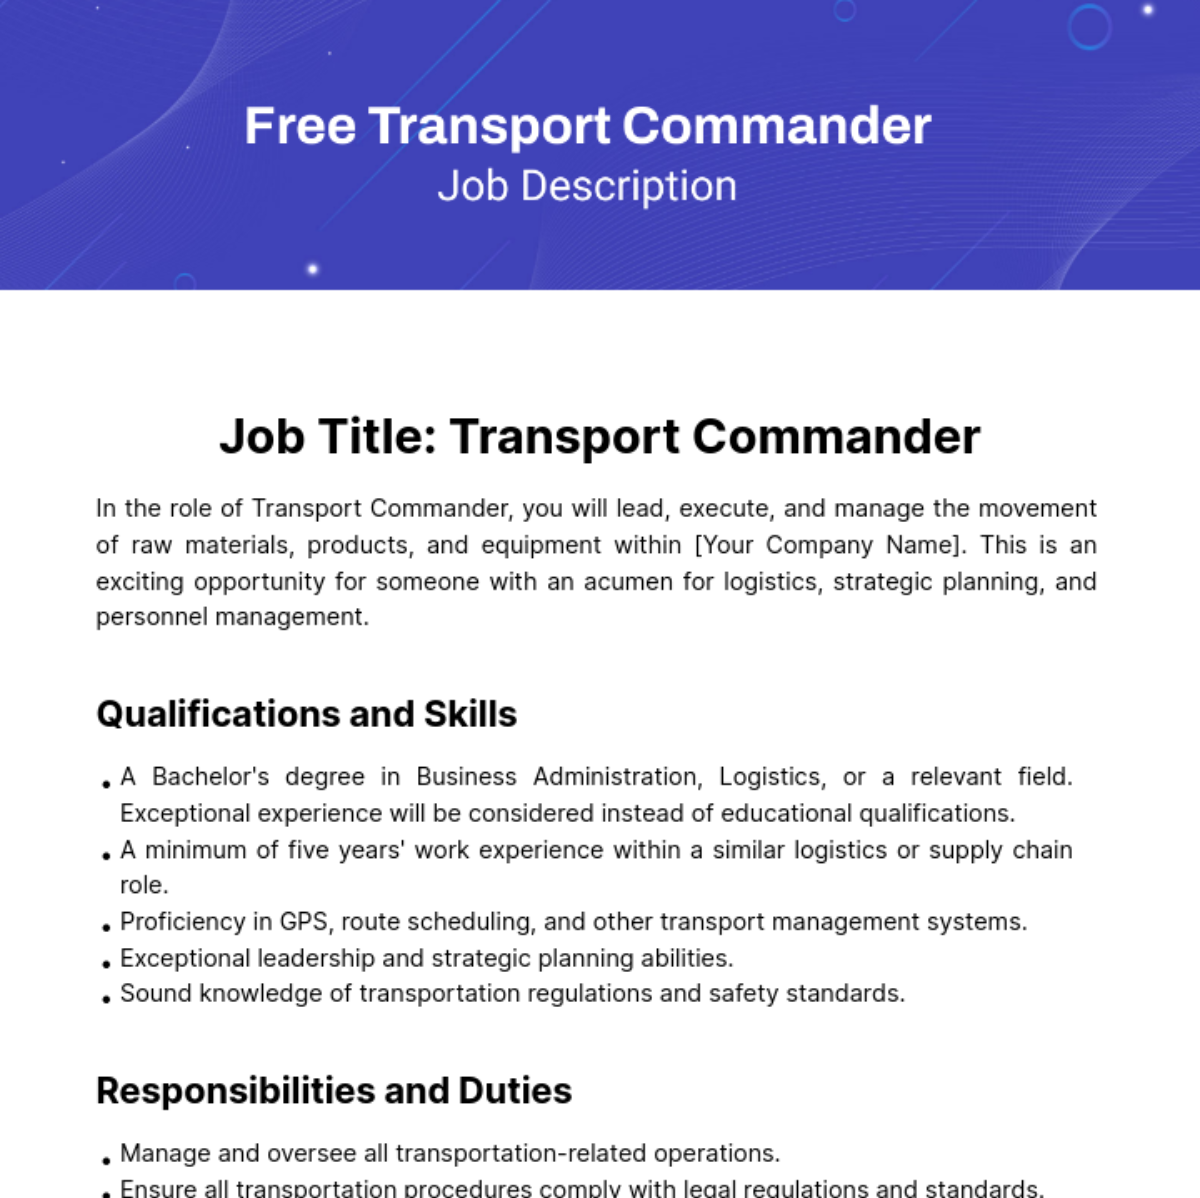 Transport Commander Job Description Template